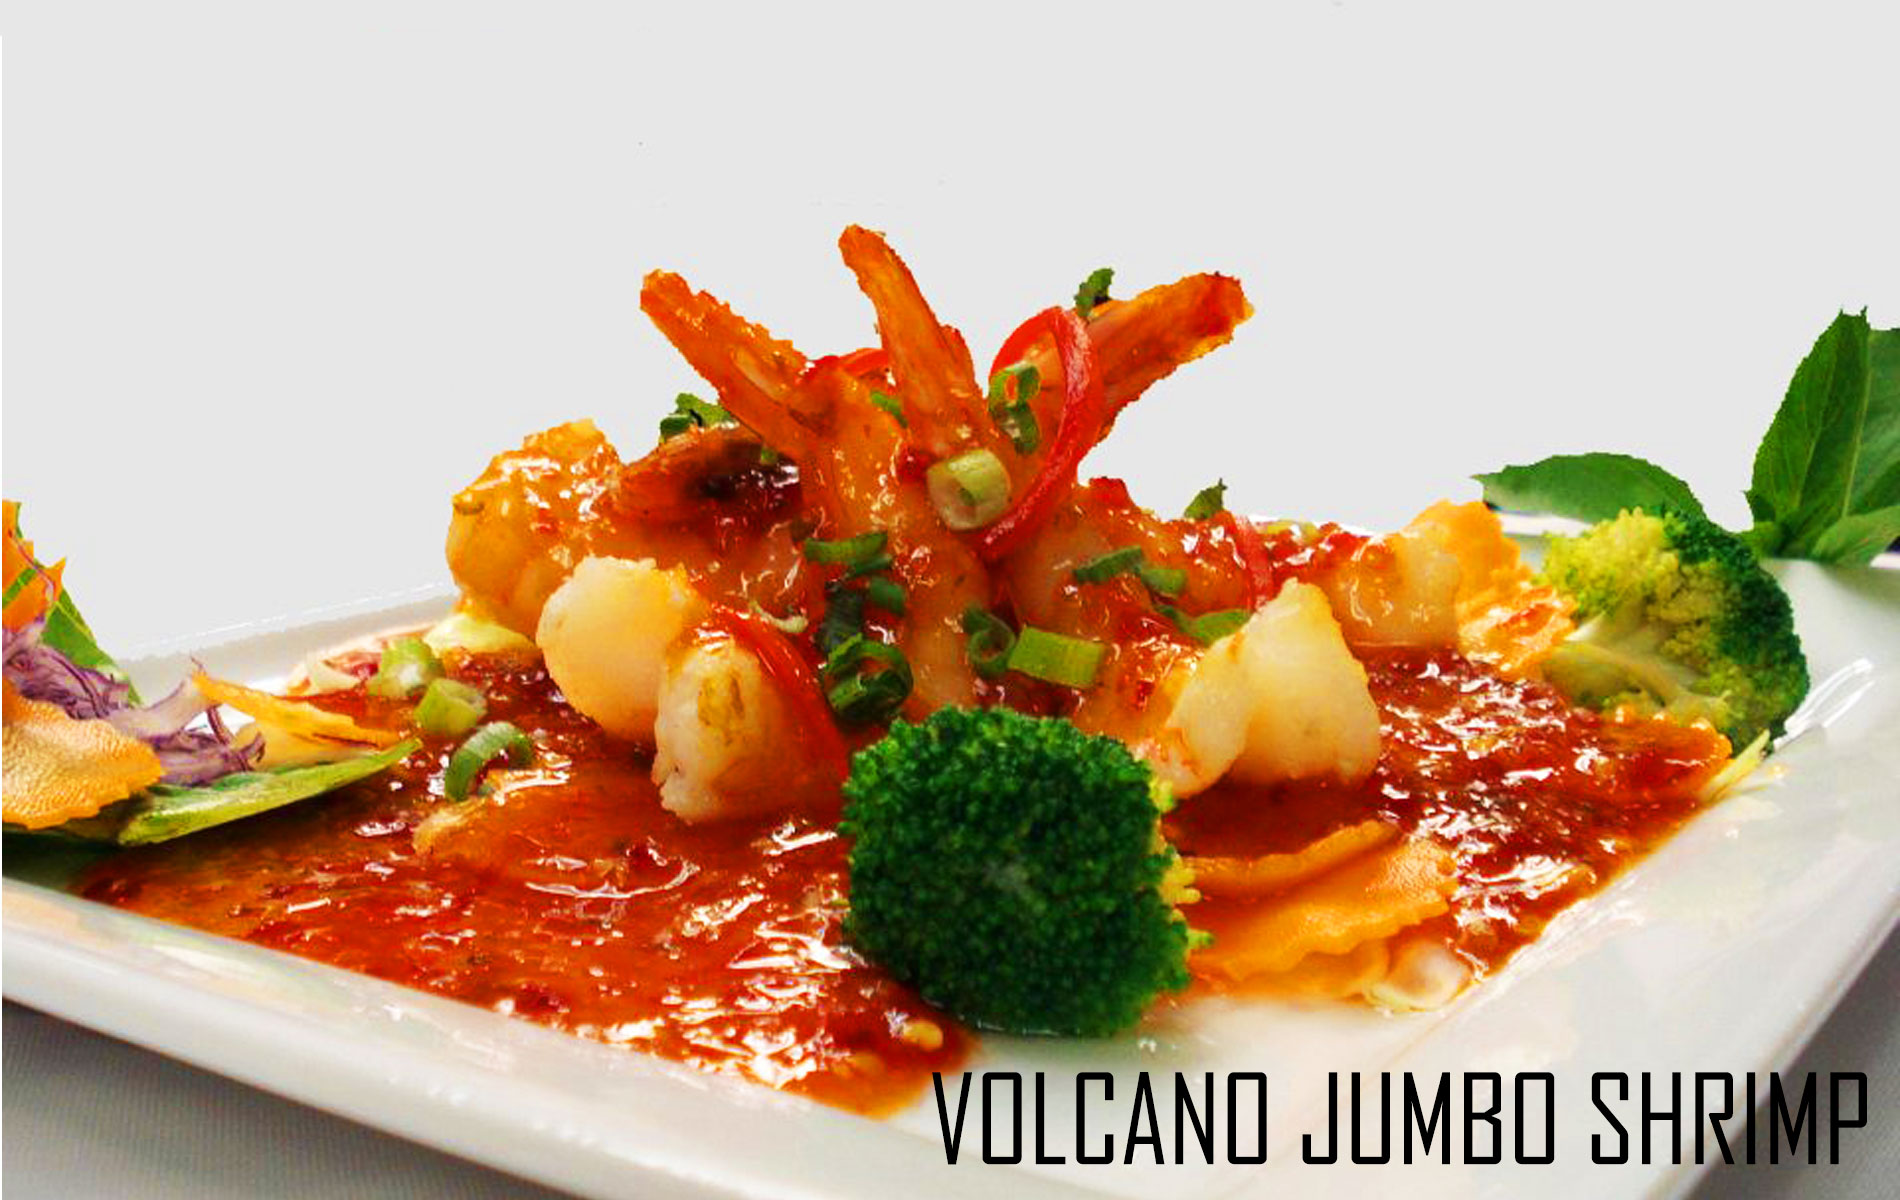 Volcano Jumbo Shrimp